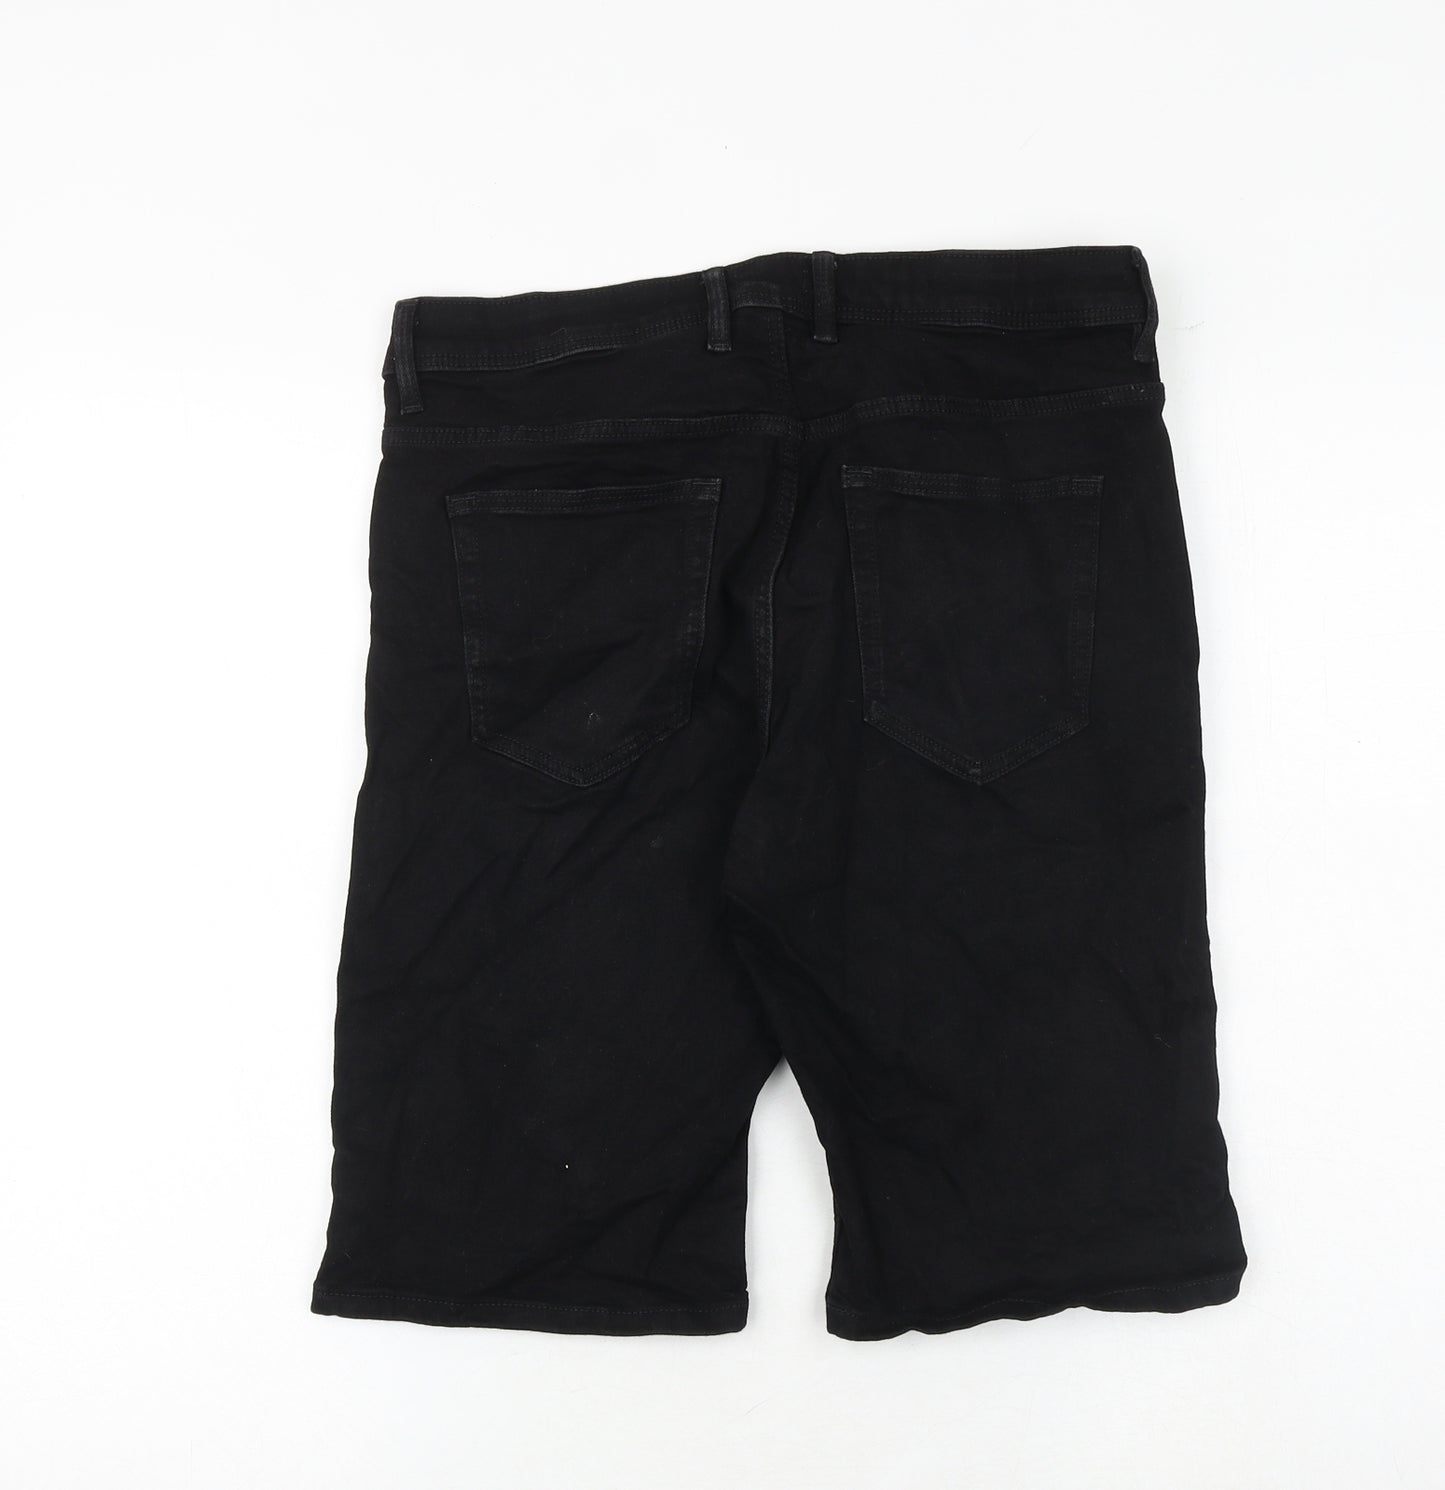 River Island Mens Black Cotton Chino Shorts Size 32 in Regular Zip